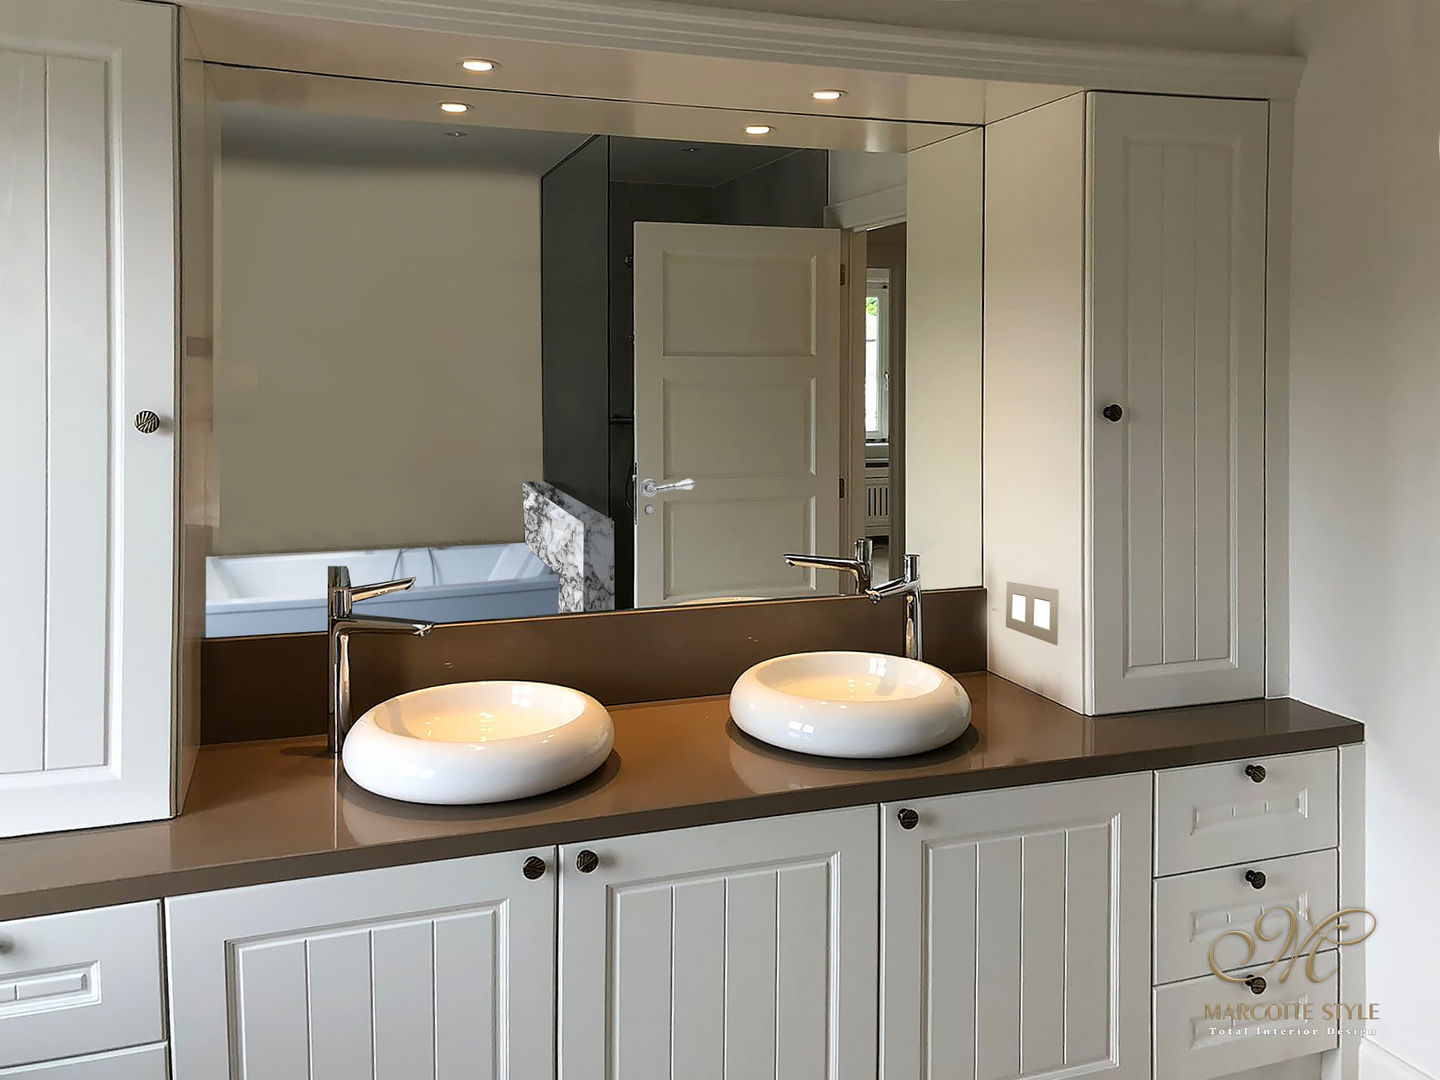 Totaal renovatie met meubelen, Marcotte Style Marcotte Style Country style bathroom Ceramic Sinks